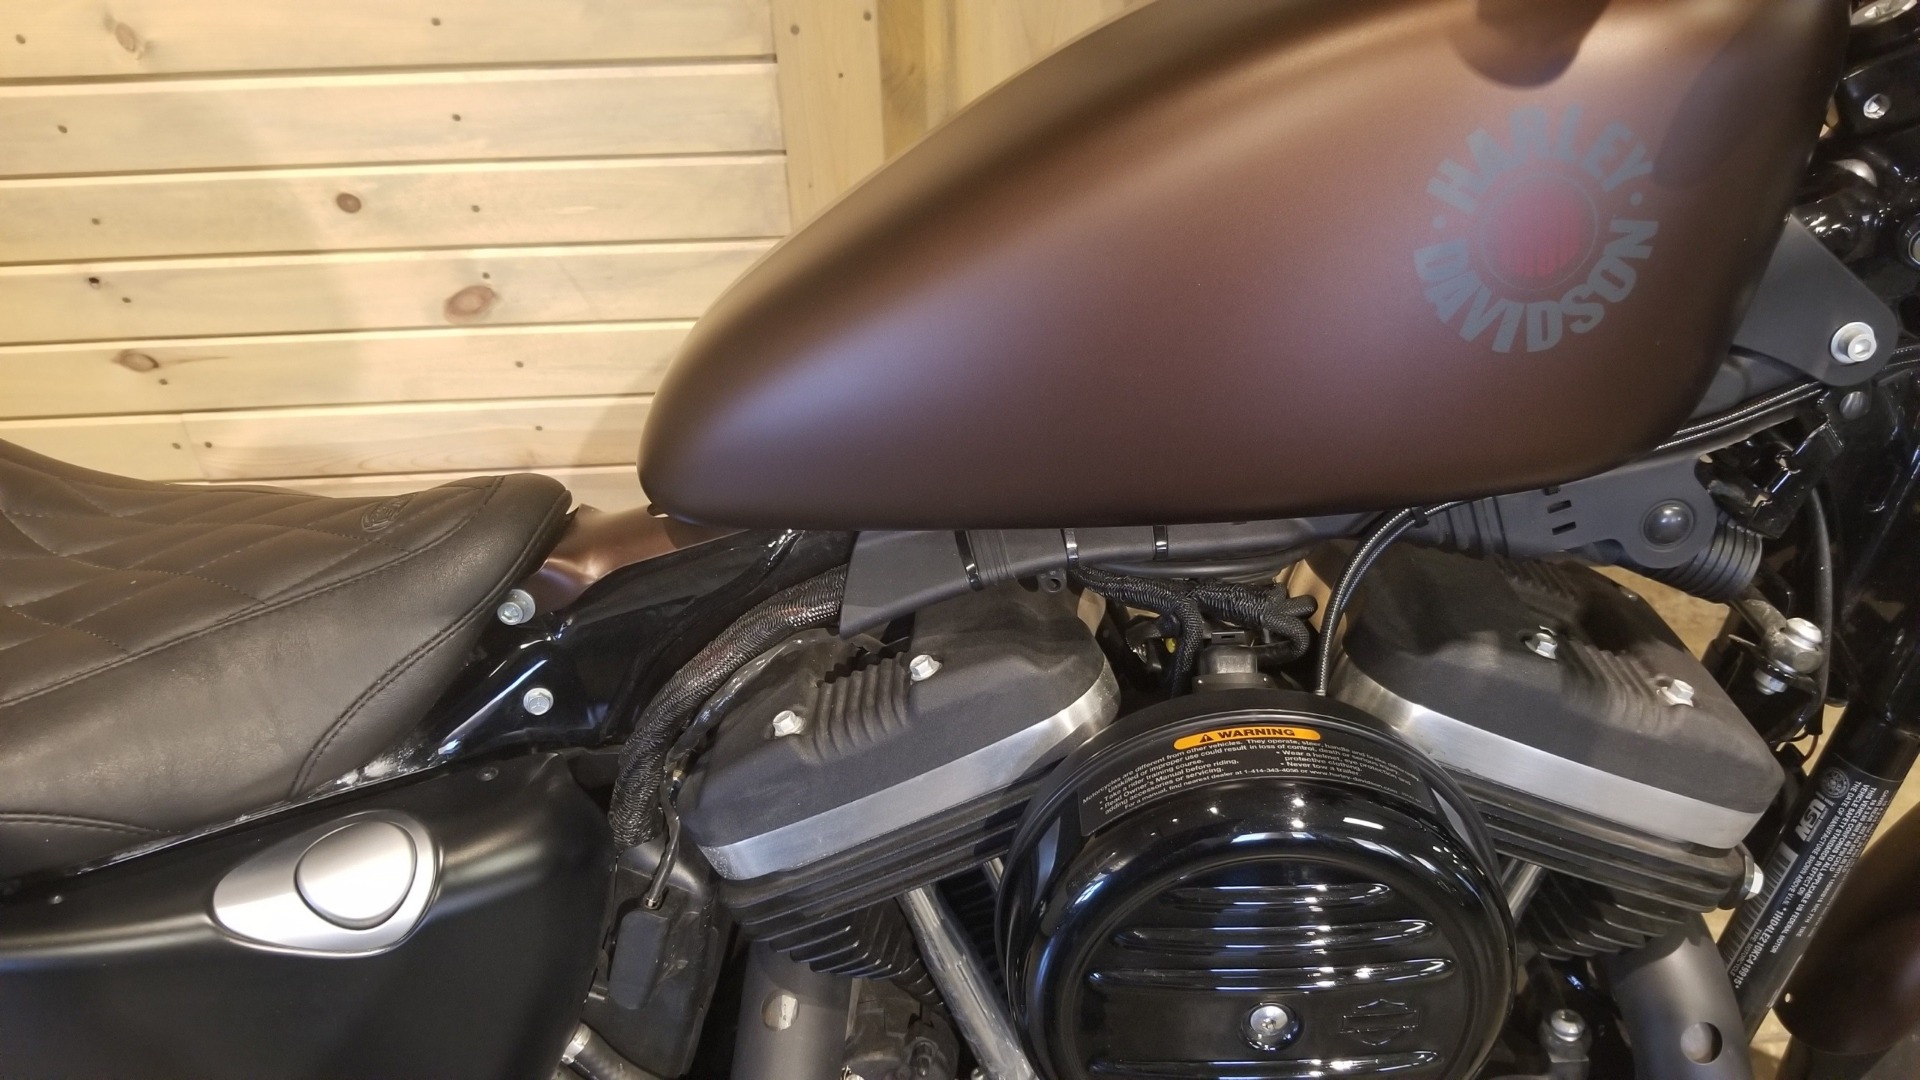 2019 Harley-Davidson Iron 883™ in Mentor, Ohio - Photo 2